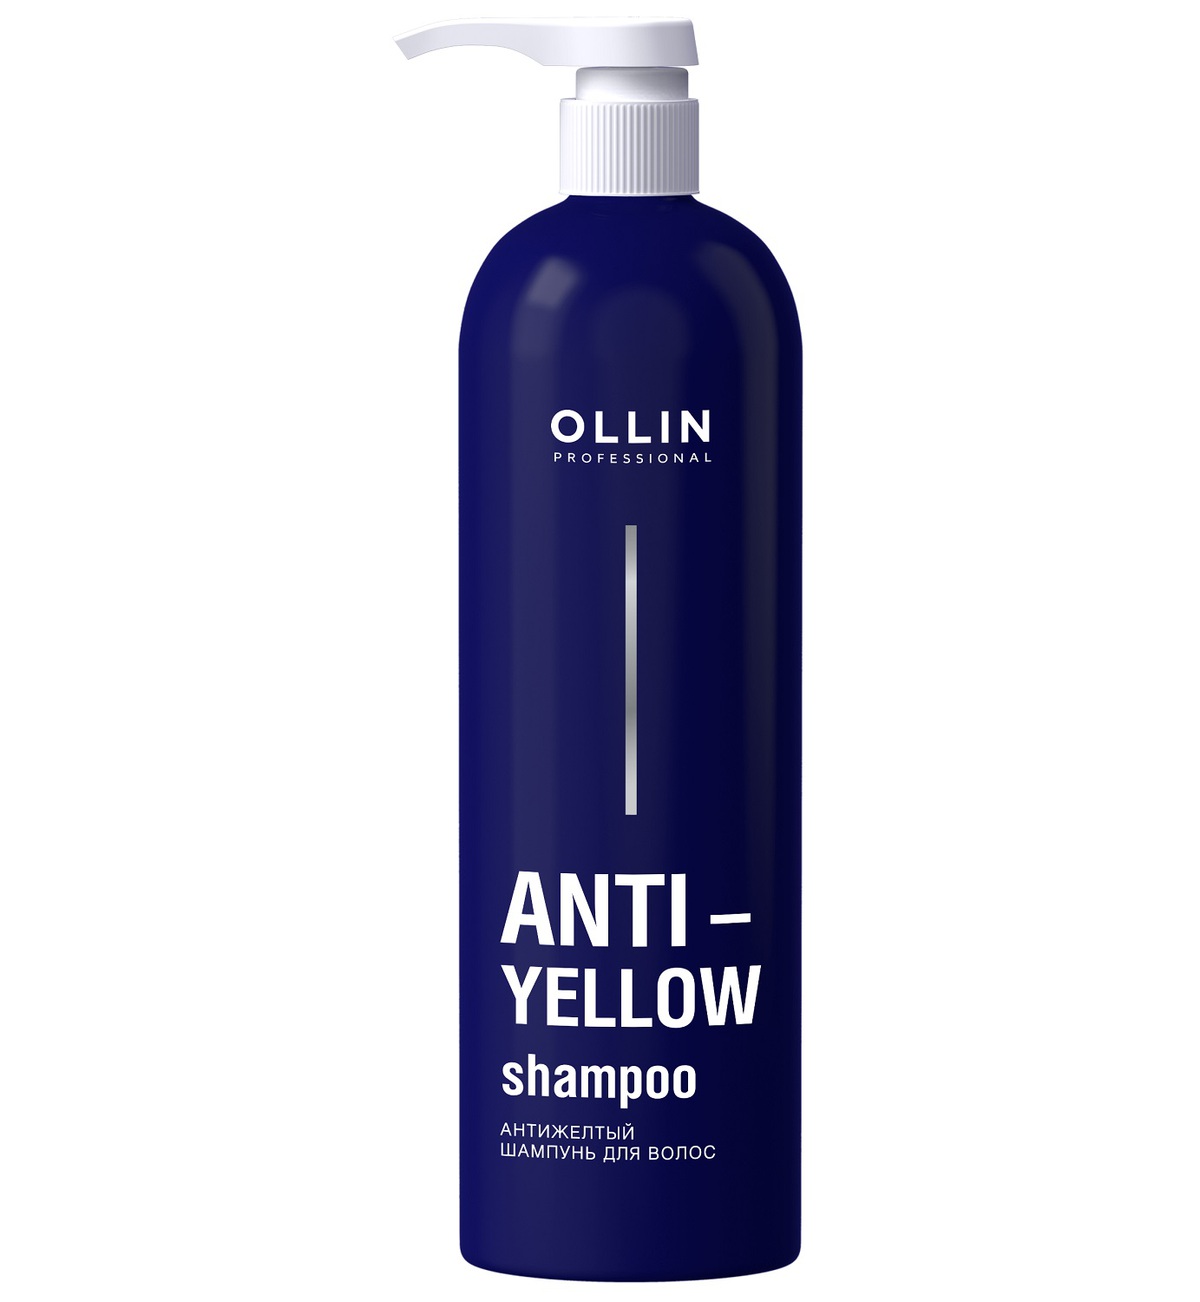 Ollin Professional Антижелтый шампунь для волос Anti-Yellow Shampoo, 500 мл (Ollin Professional, Anti-Yellow) simparty professional шампунь для волос антижелтый anti yellow 1000мл